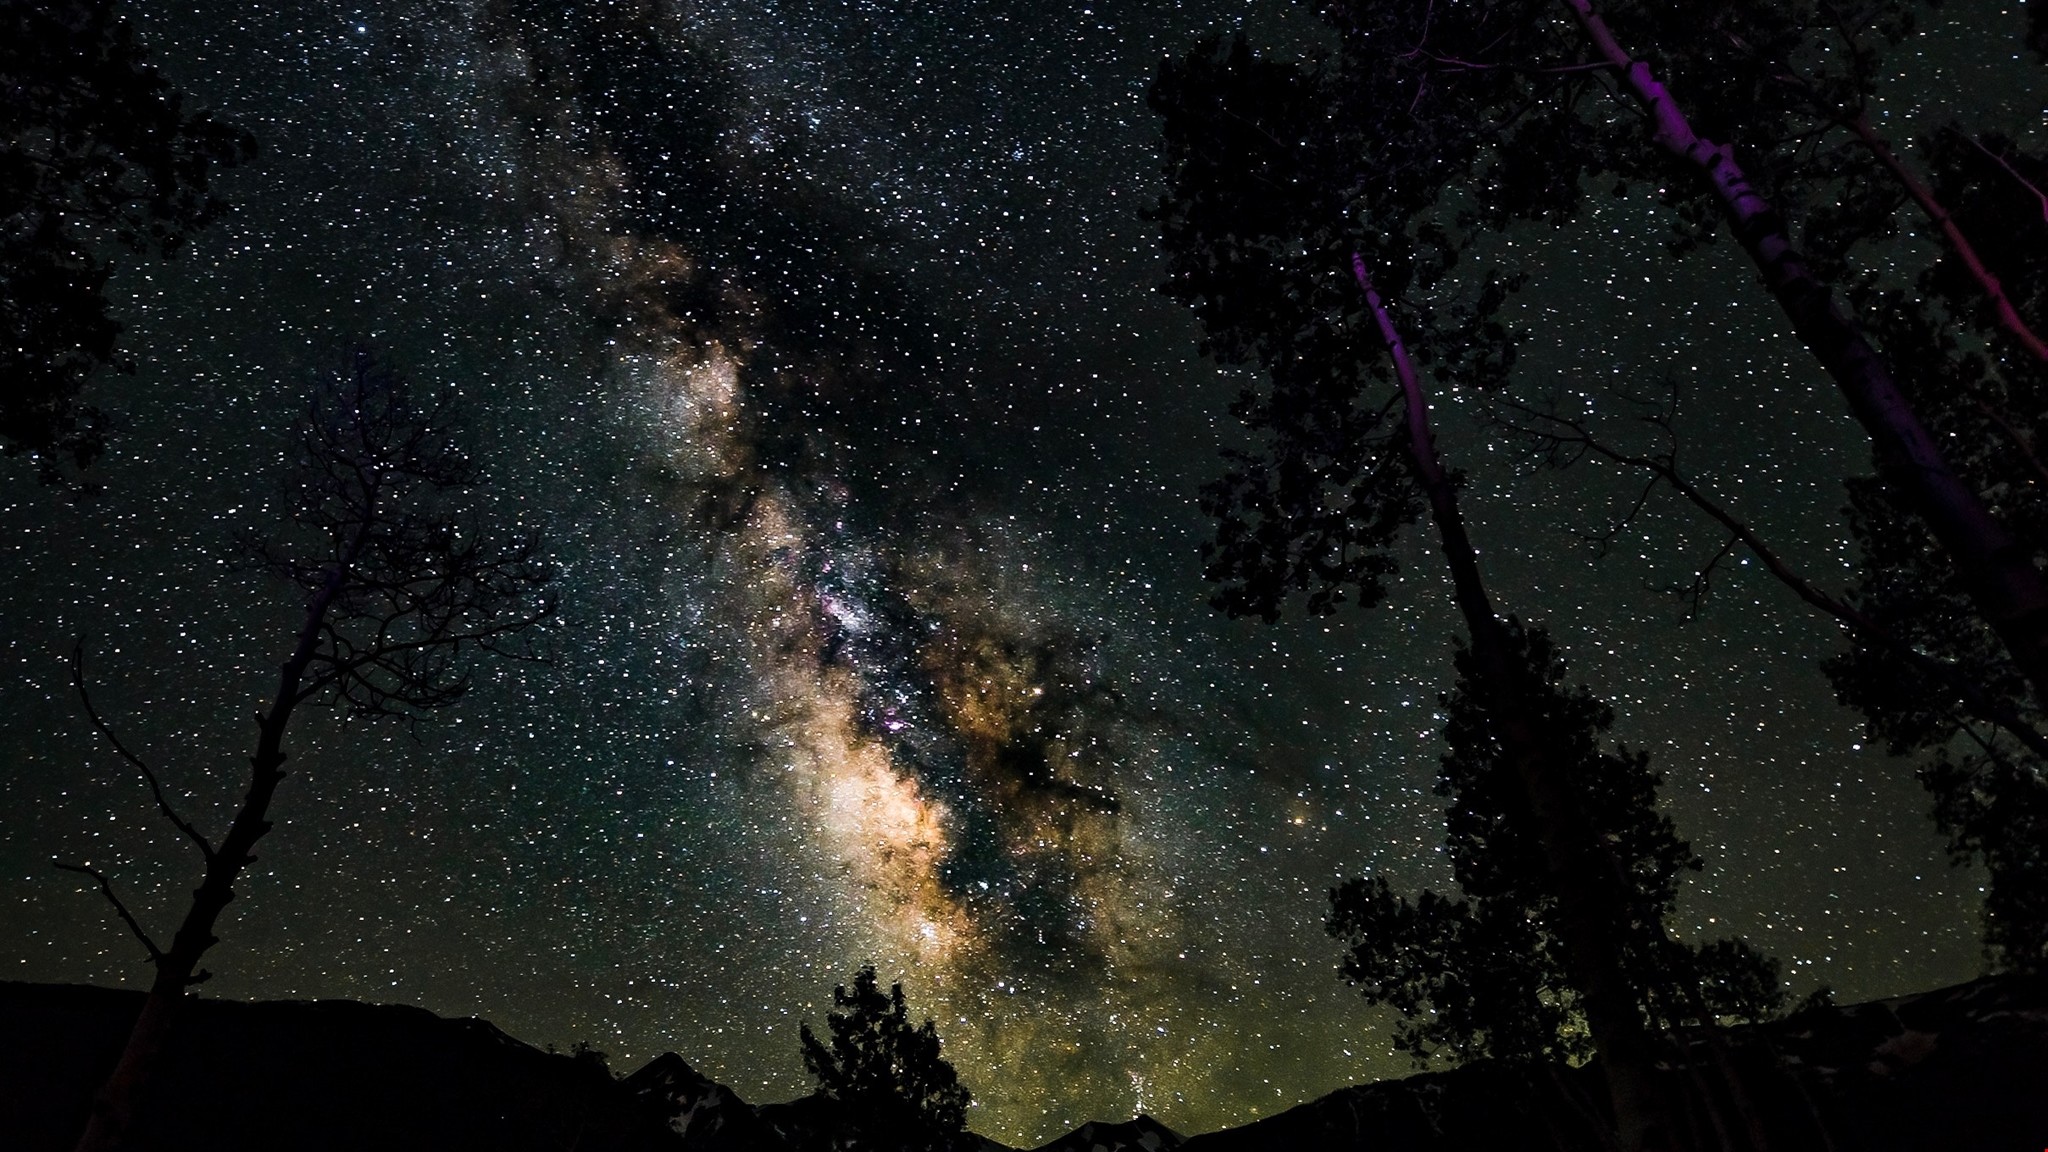 2048x1152, Download 2k Starry Sky, Stars, Night - Milky Way - HD Wallpaper 